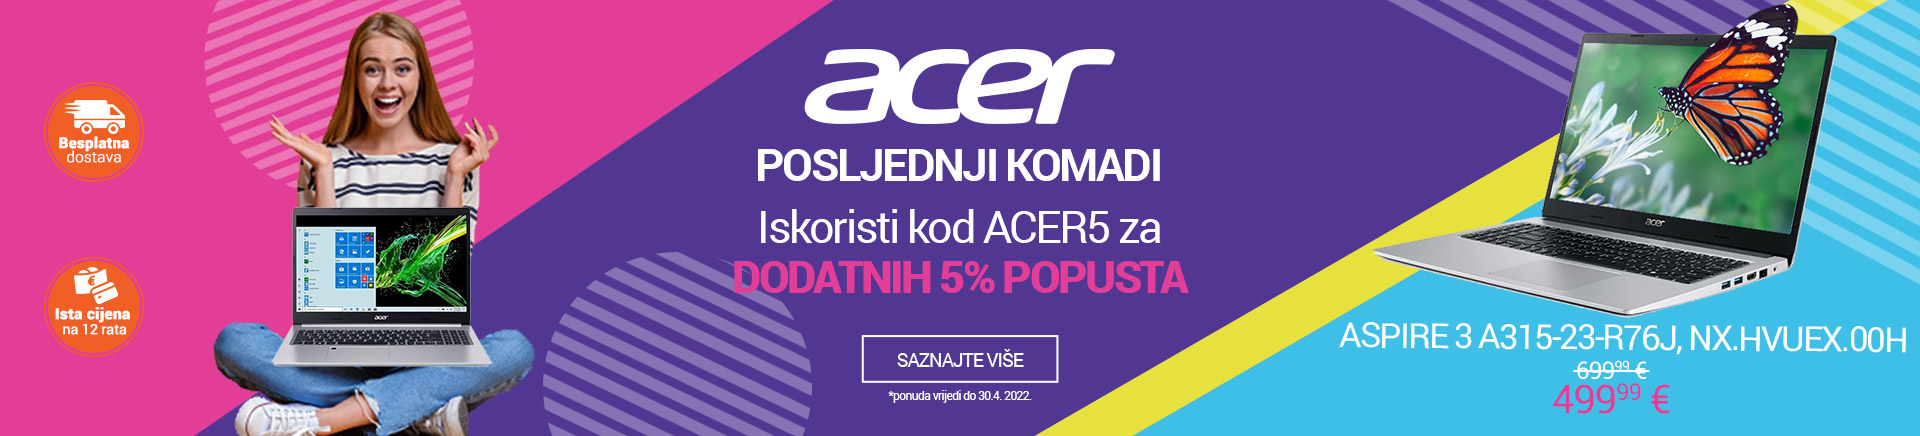 CG Acer kod 5%popusta 2varijanta MOBILE 380 X 436.jpg